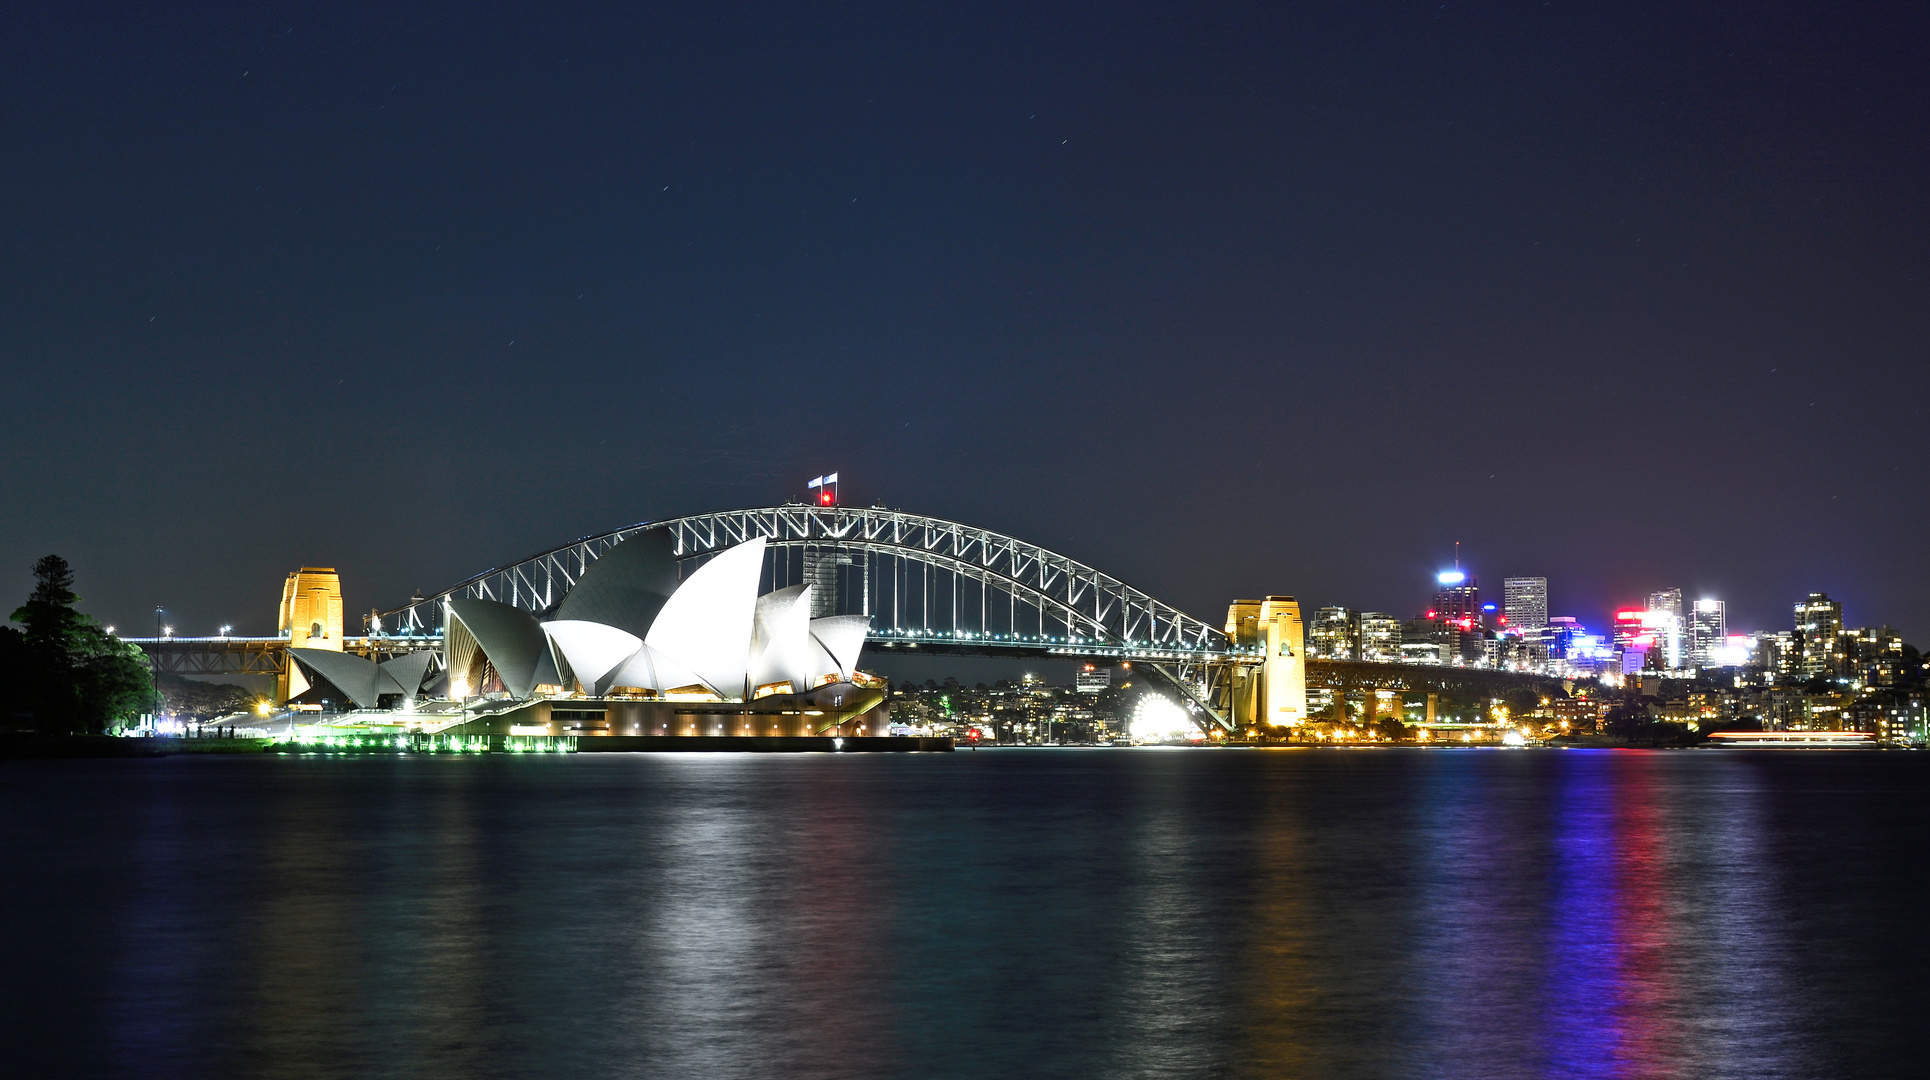 Sydney Opera House / Habour Bridge